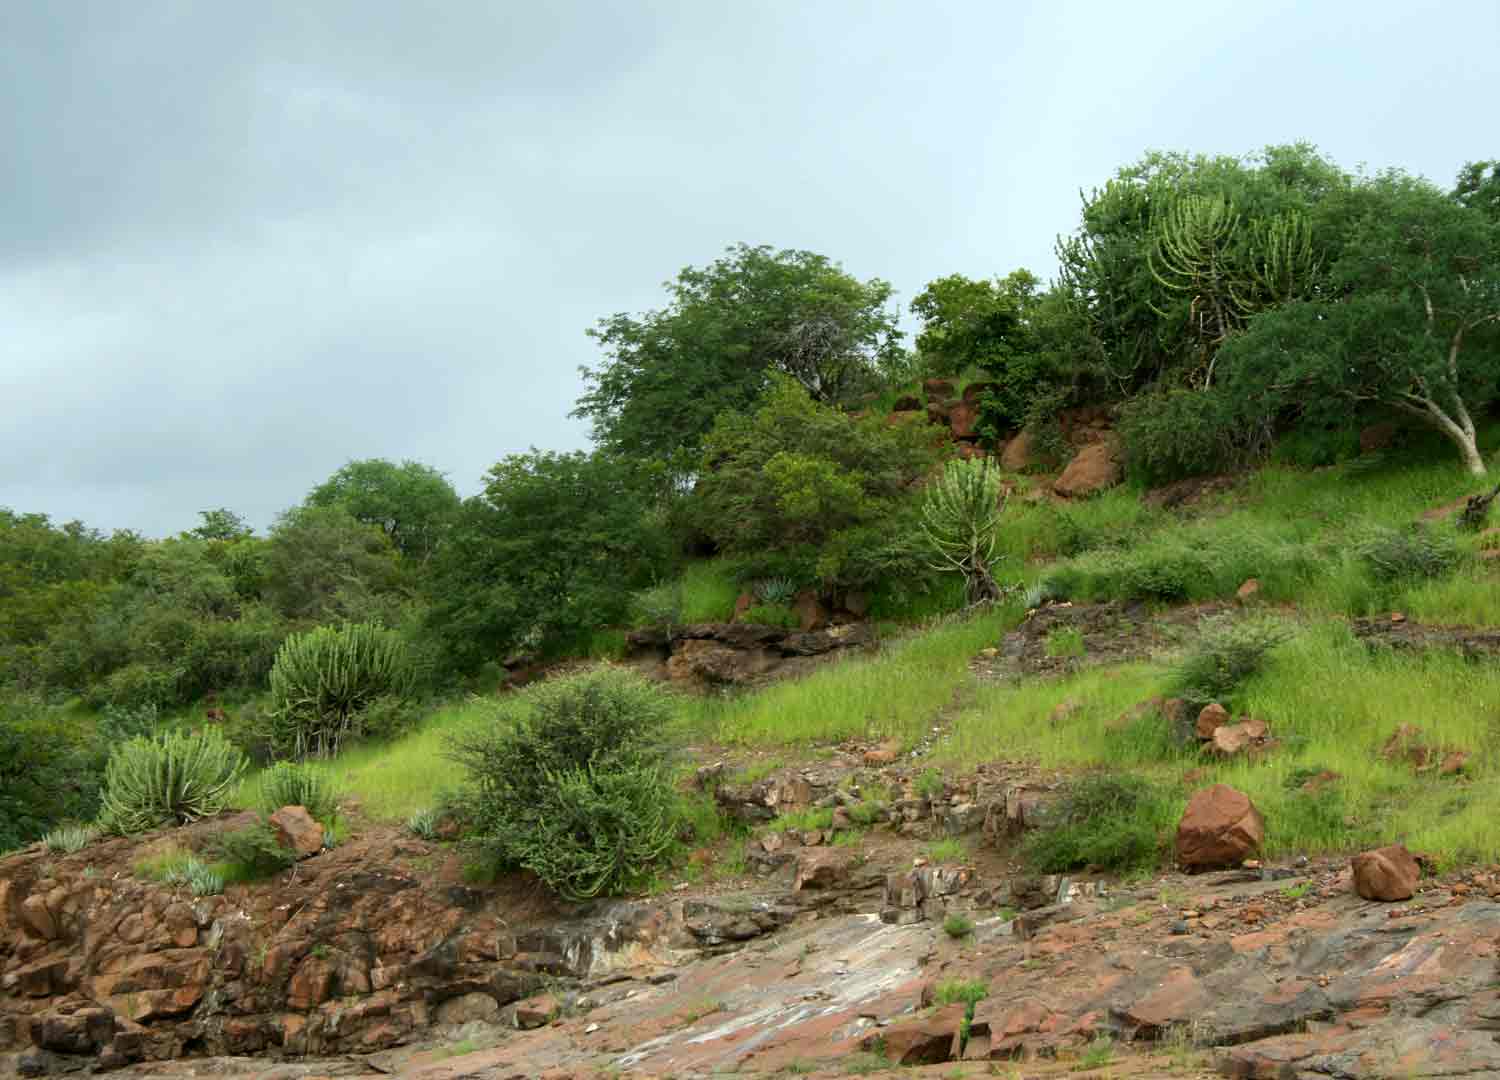 Euphorbia cooperi and Aloe chabaudii on the basalt hills.